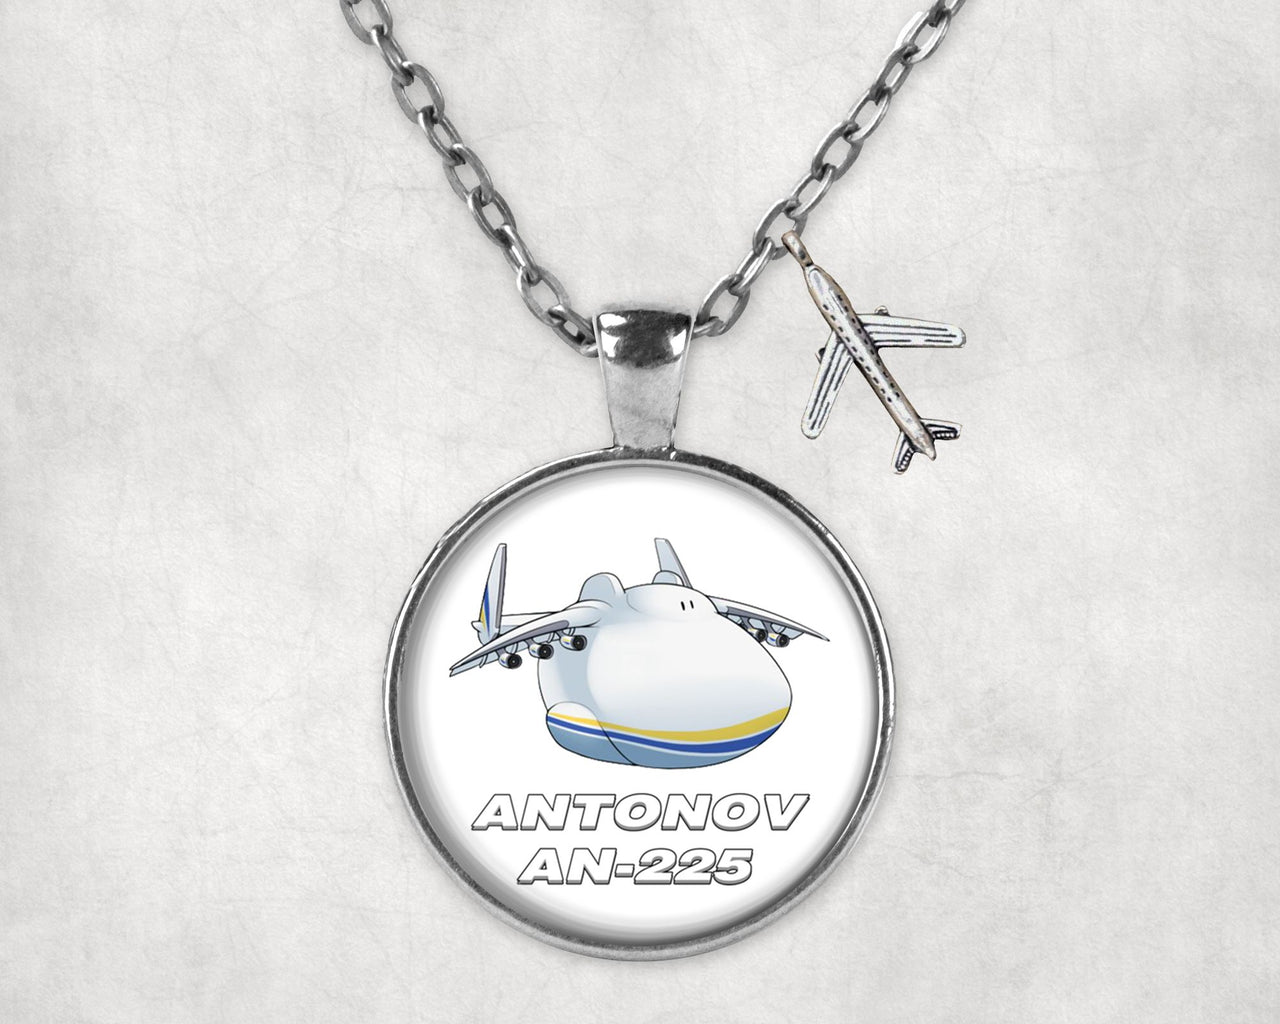 Antonov AN-225 (21) Designed Necklaces